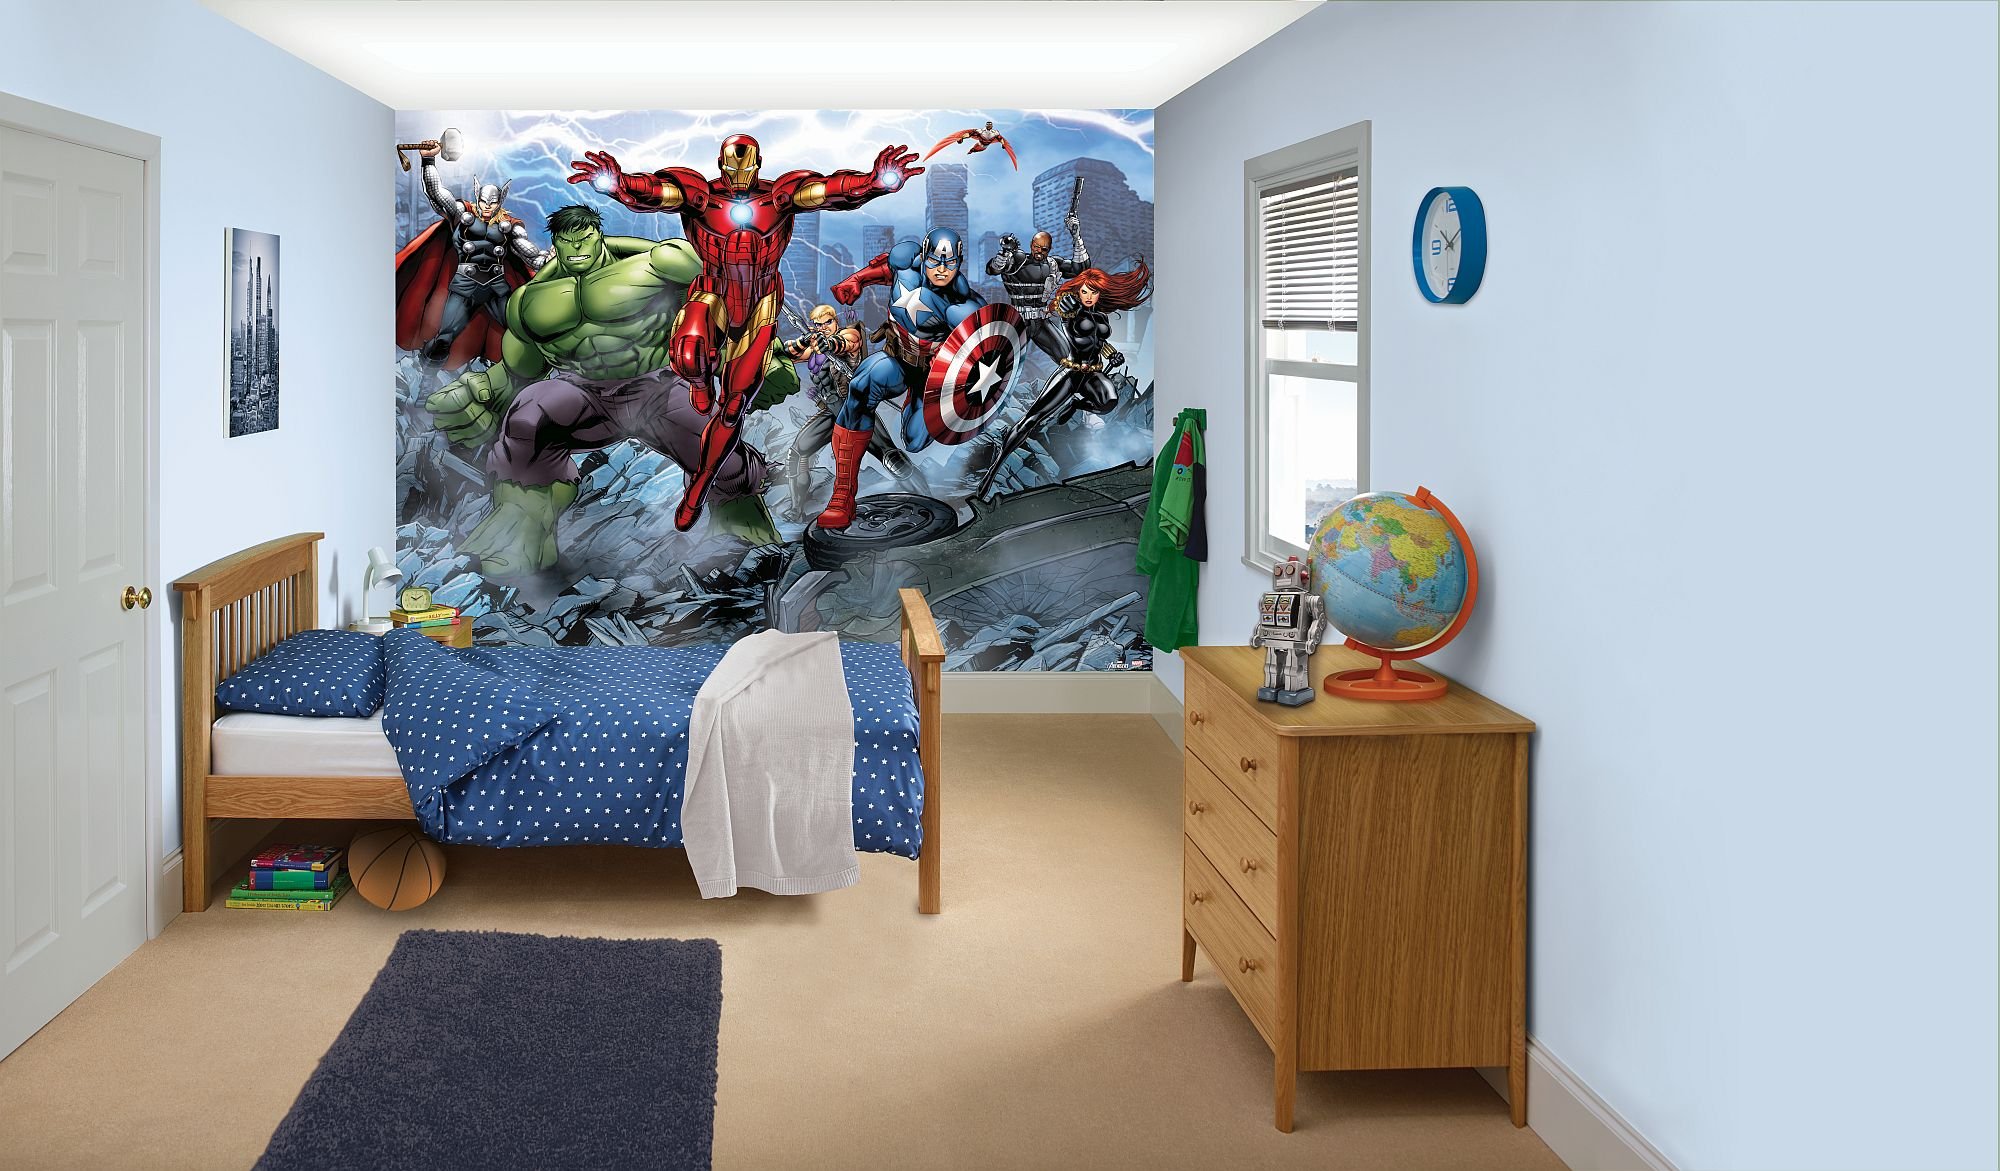 Комната марвел. Детская комната Мстители. Комната в стиле Марвел для мальчика. Интерьер детской в стиле Мстителей. Детская комната Марвел.